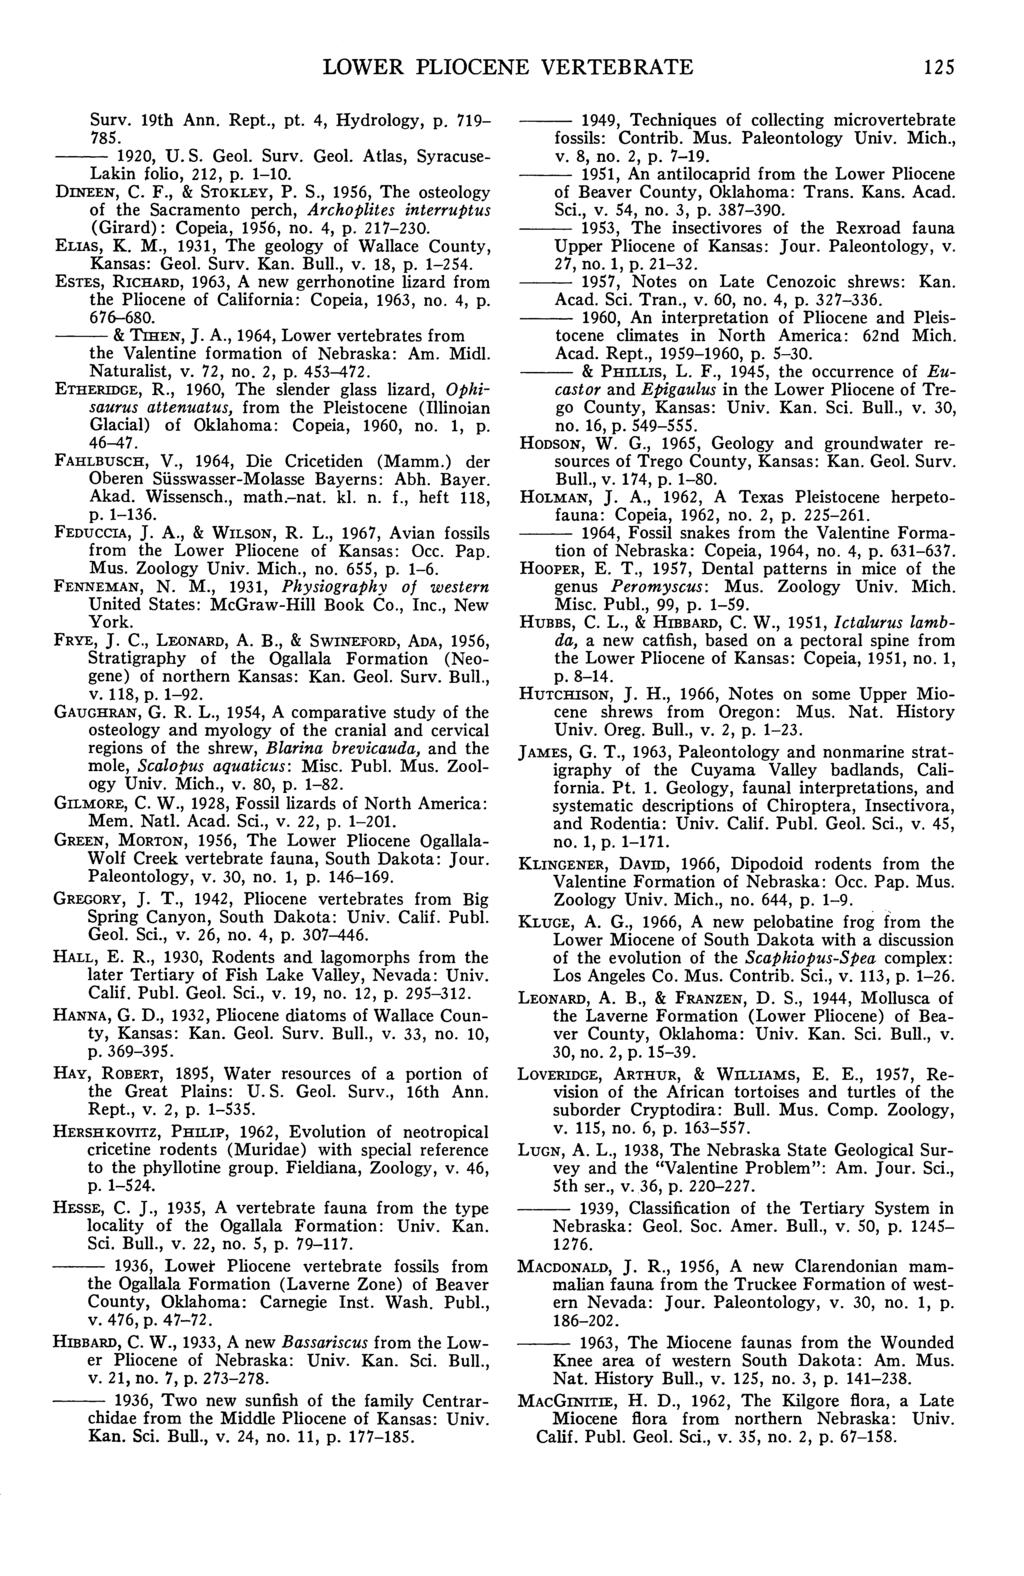 LOWER PLIOCENE VERTEBRATE 125 Surv. 19th Ann. Rept., pt. 4, Hydrology, p. 719-785. - 1920, U.S. Geol. Surv. Geol. Atlas, Syracuse- Lakin folio, 212, p. 1-10. DINEEN, C. F., & STOKLEY, P. S., 1956, The osteolonv of the Sacramento wrch.